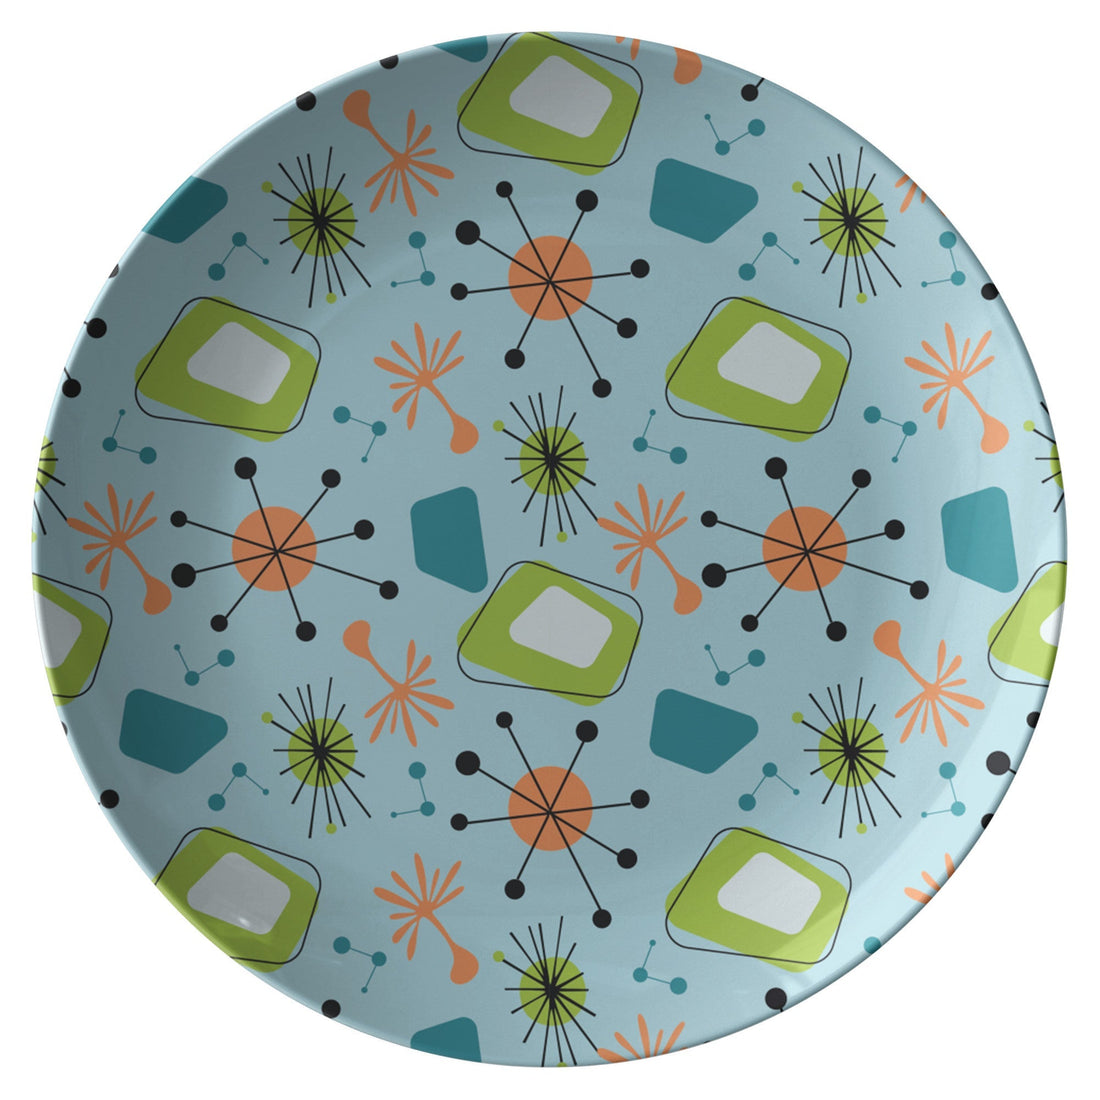 Kate McEnroe New York Atomic Boomerang Dinner Plate, Teal, Mint Green Mid Century Modern Dish Plates